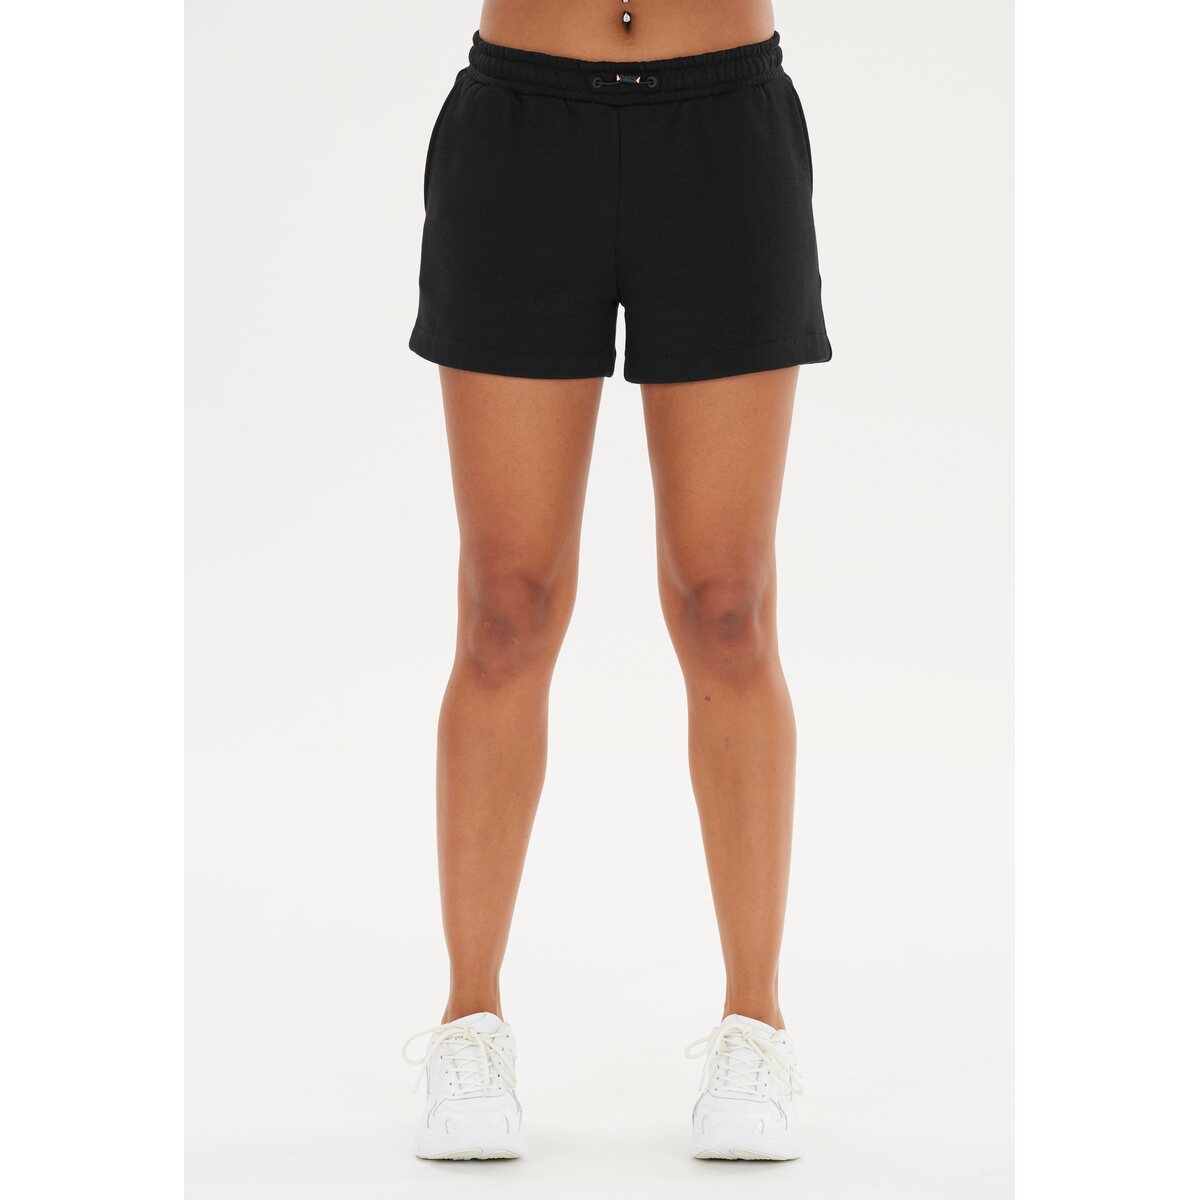 Athlecia Ruthie Womenswear Shorts - Black 3 Shaws Department Stores